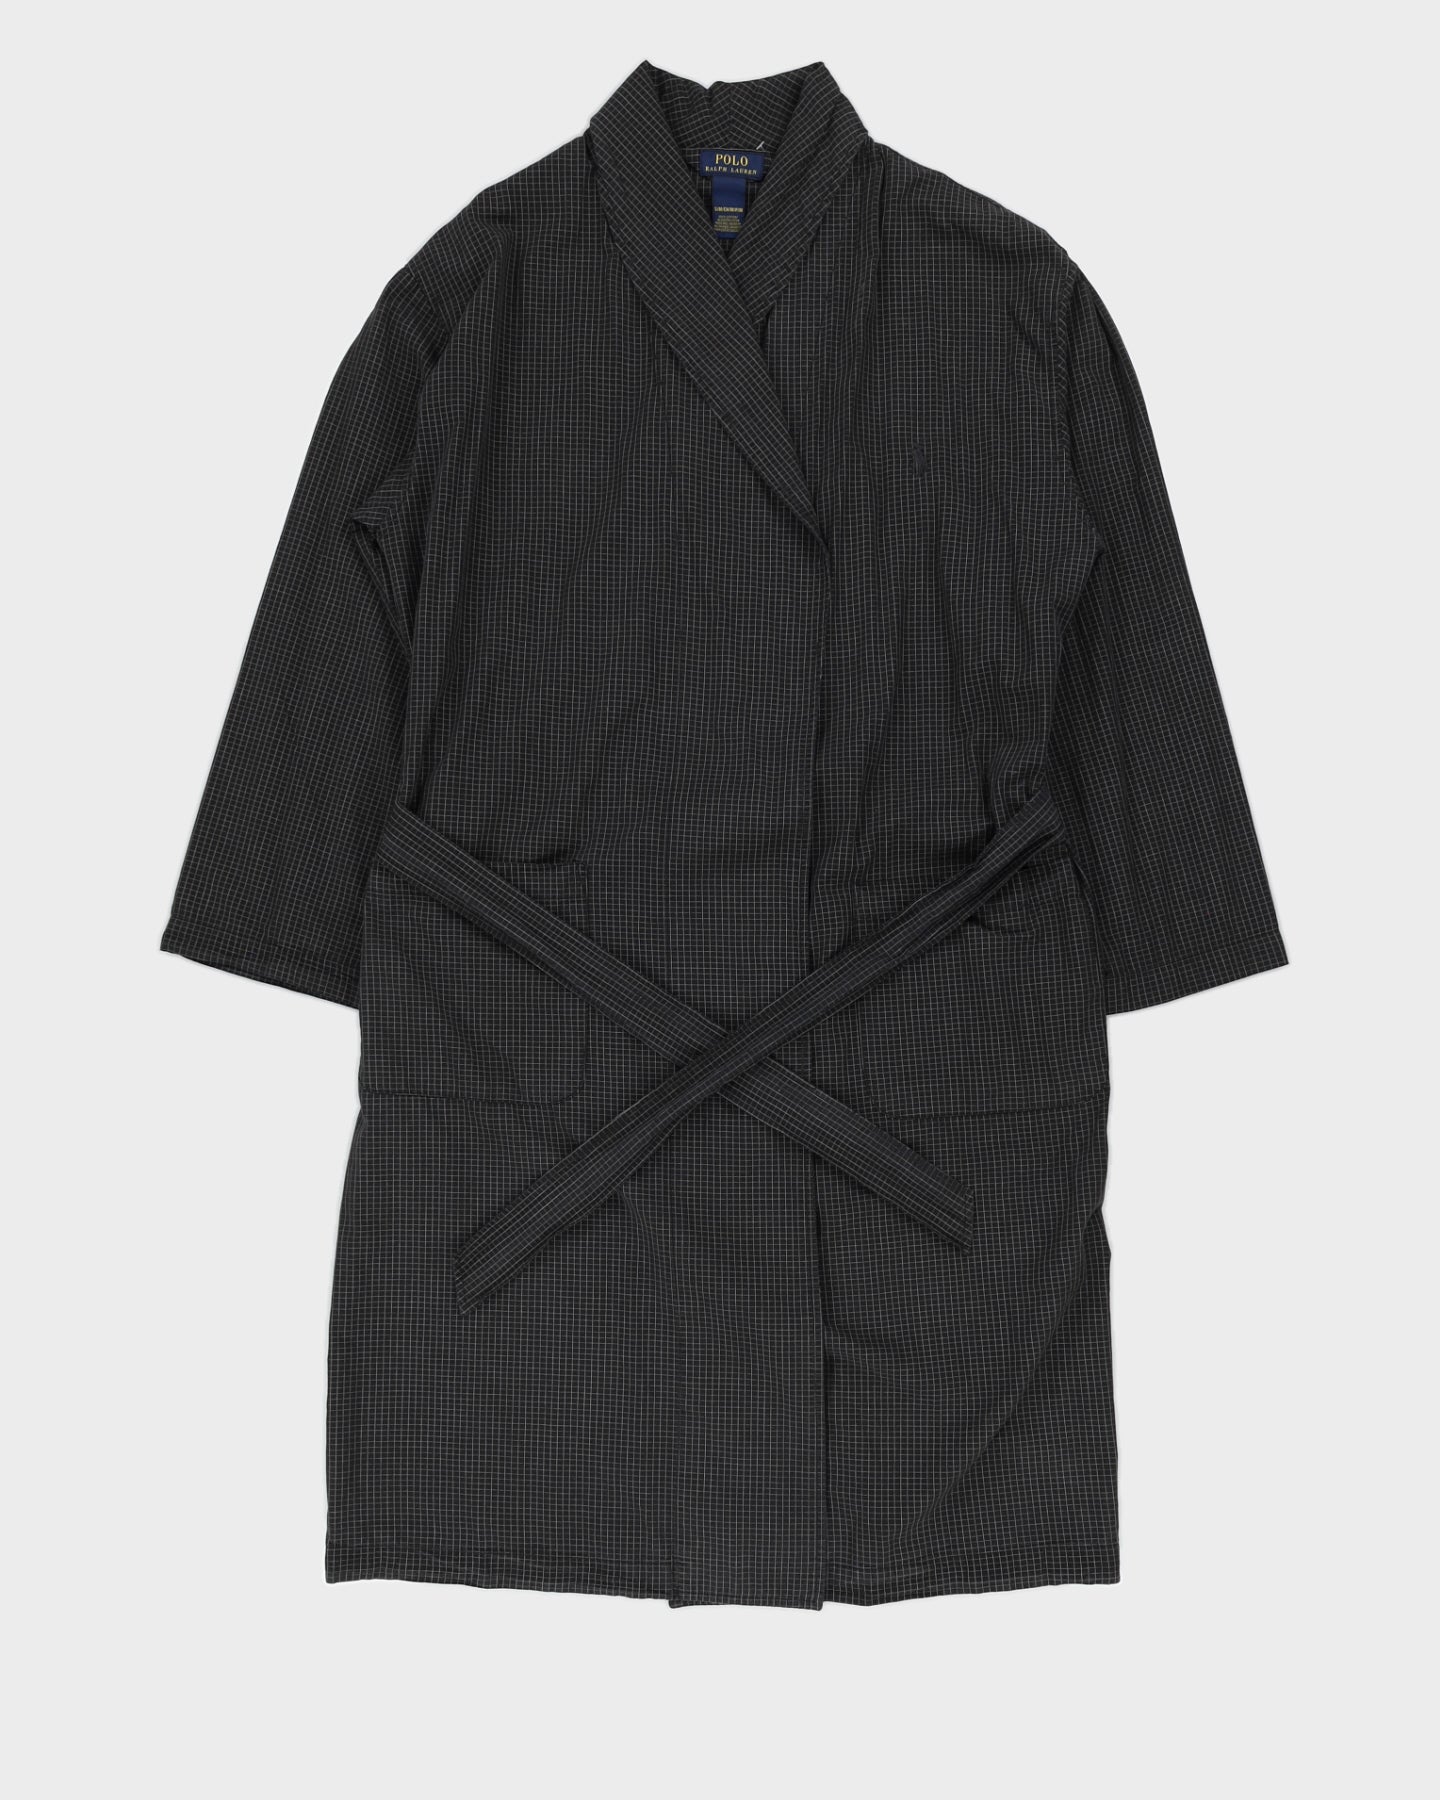 Polo Ralph Lauren Black Checked Dressing Gown - XL